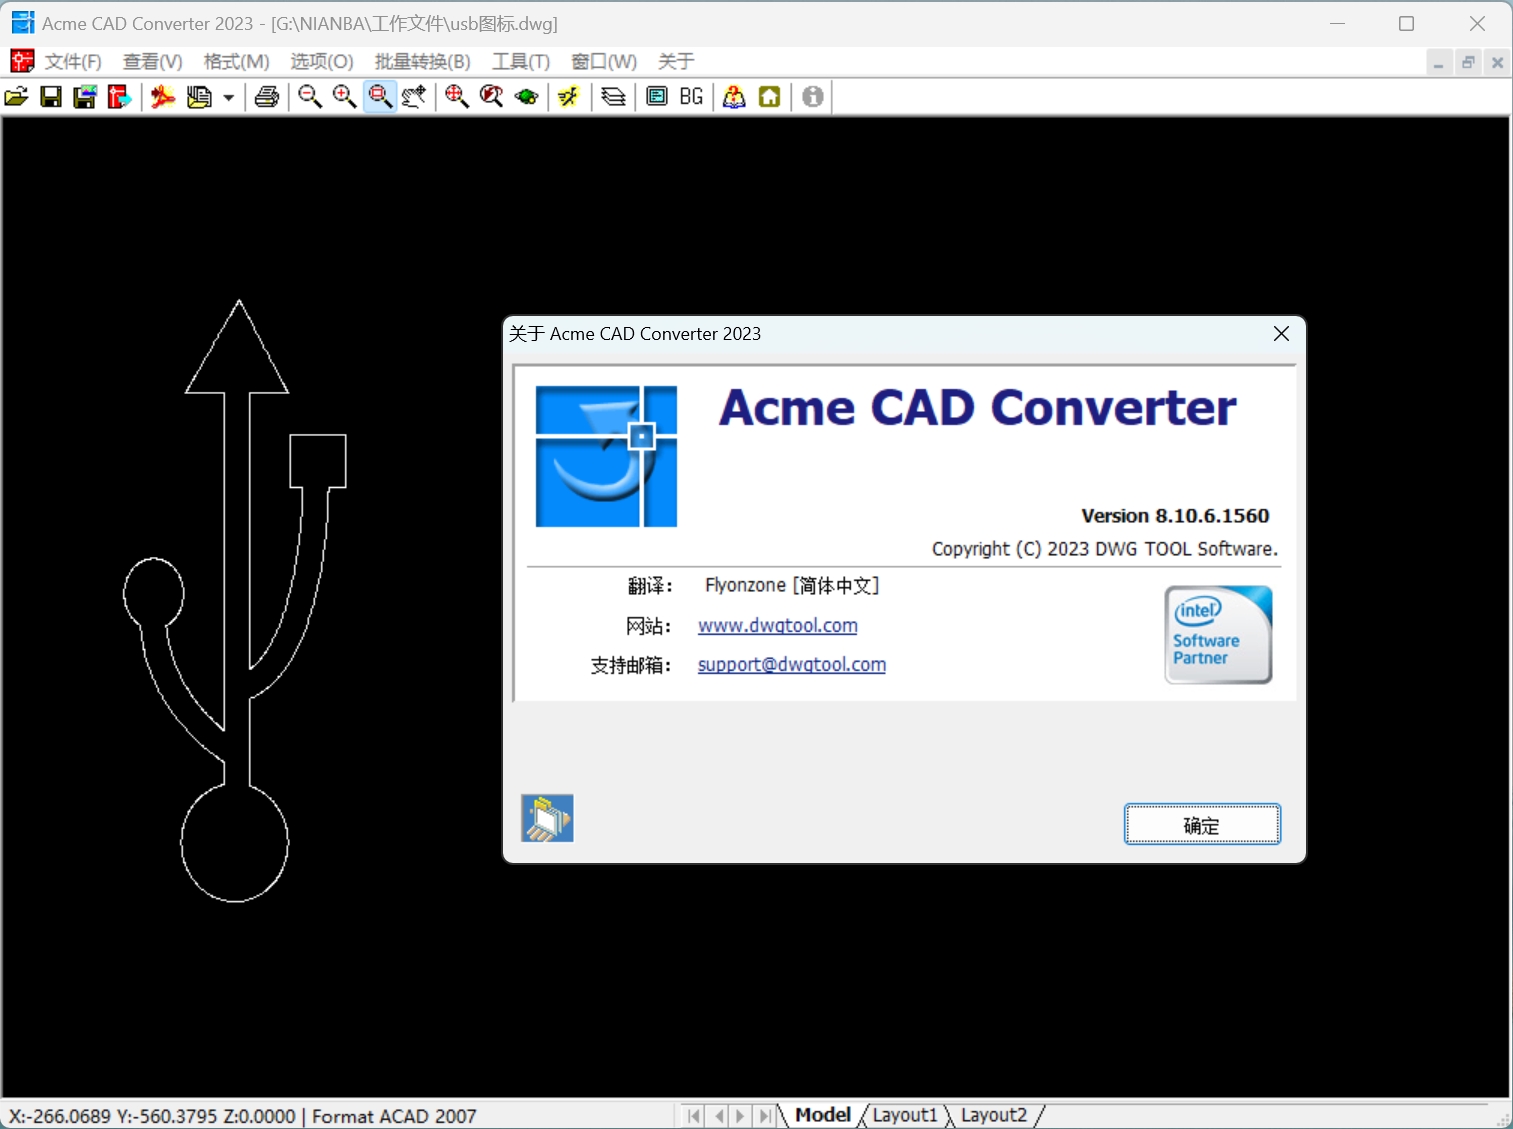 Acme CAD Converter 2023